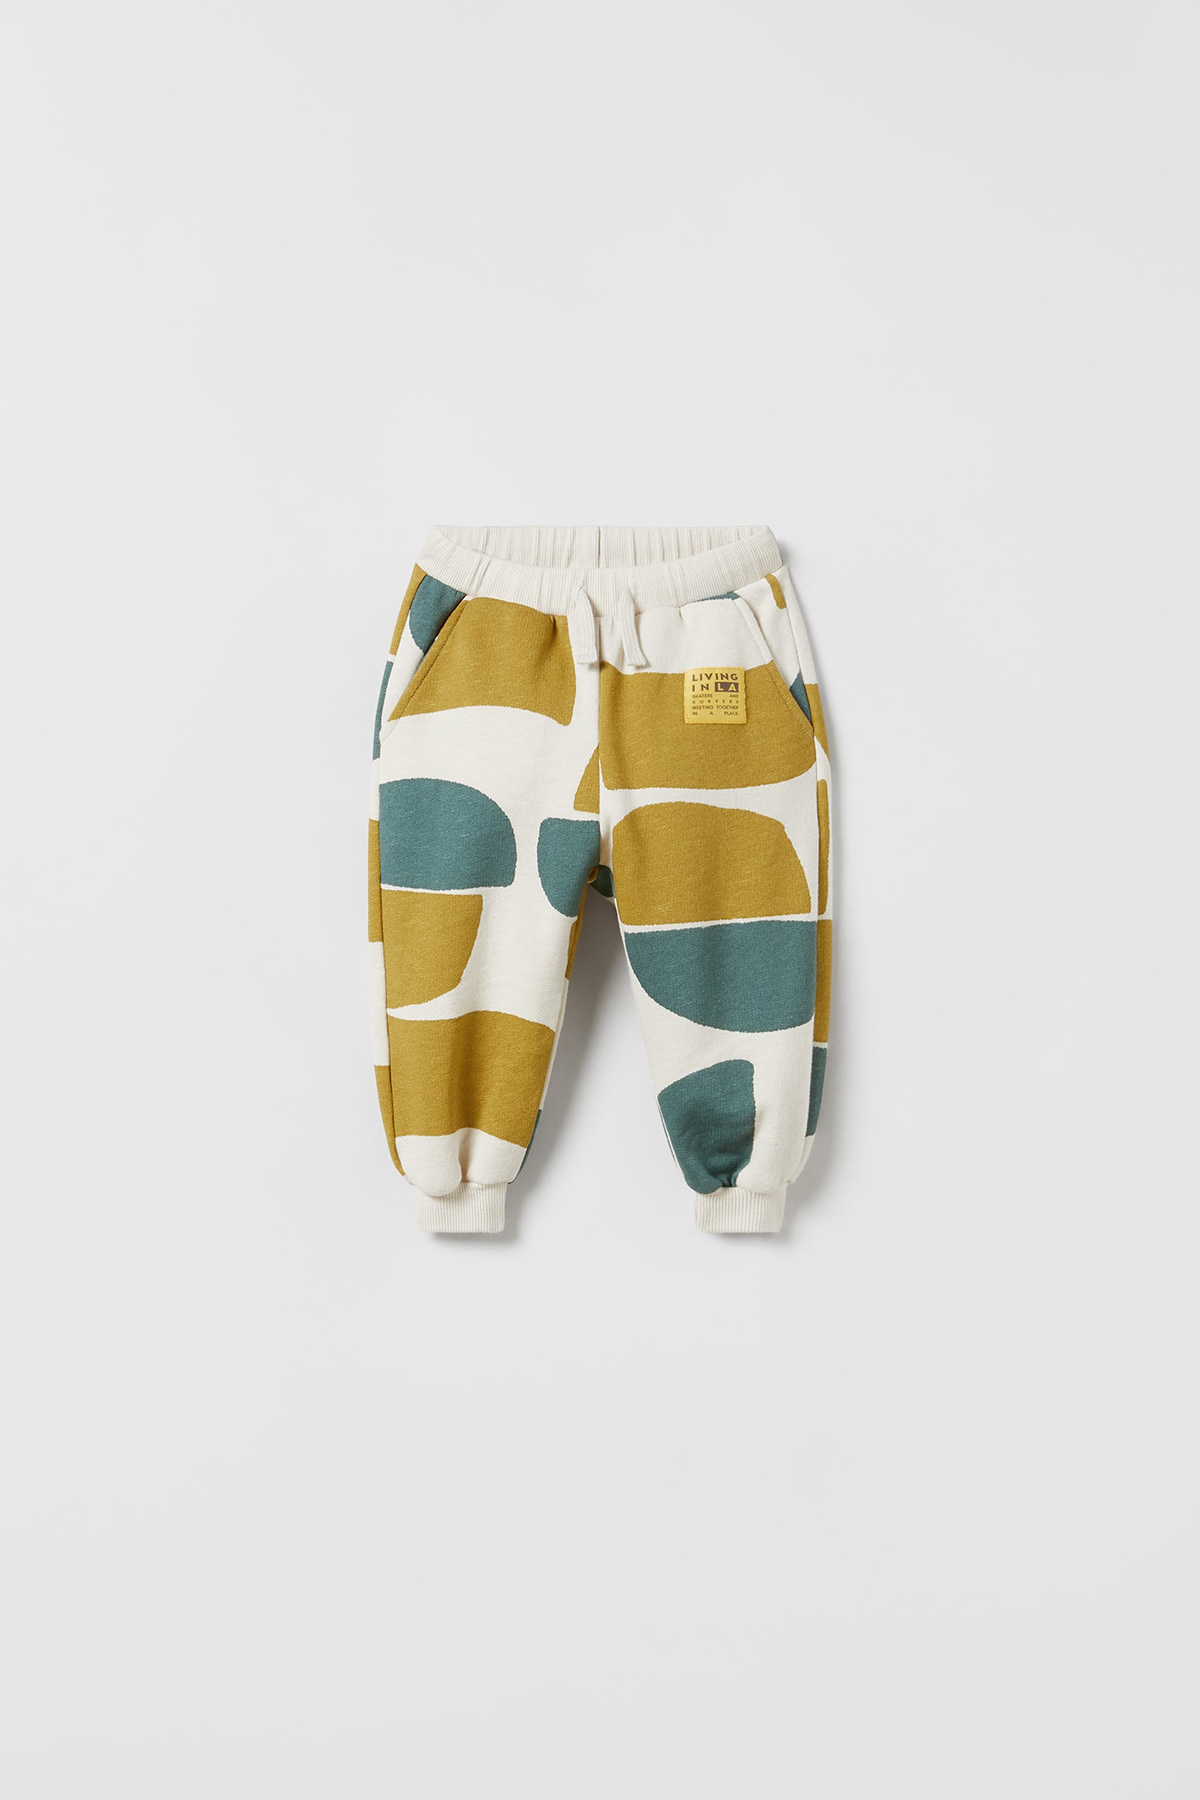 abstract geometric kidswear pants shapes zara zarababyboy zarakids